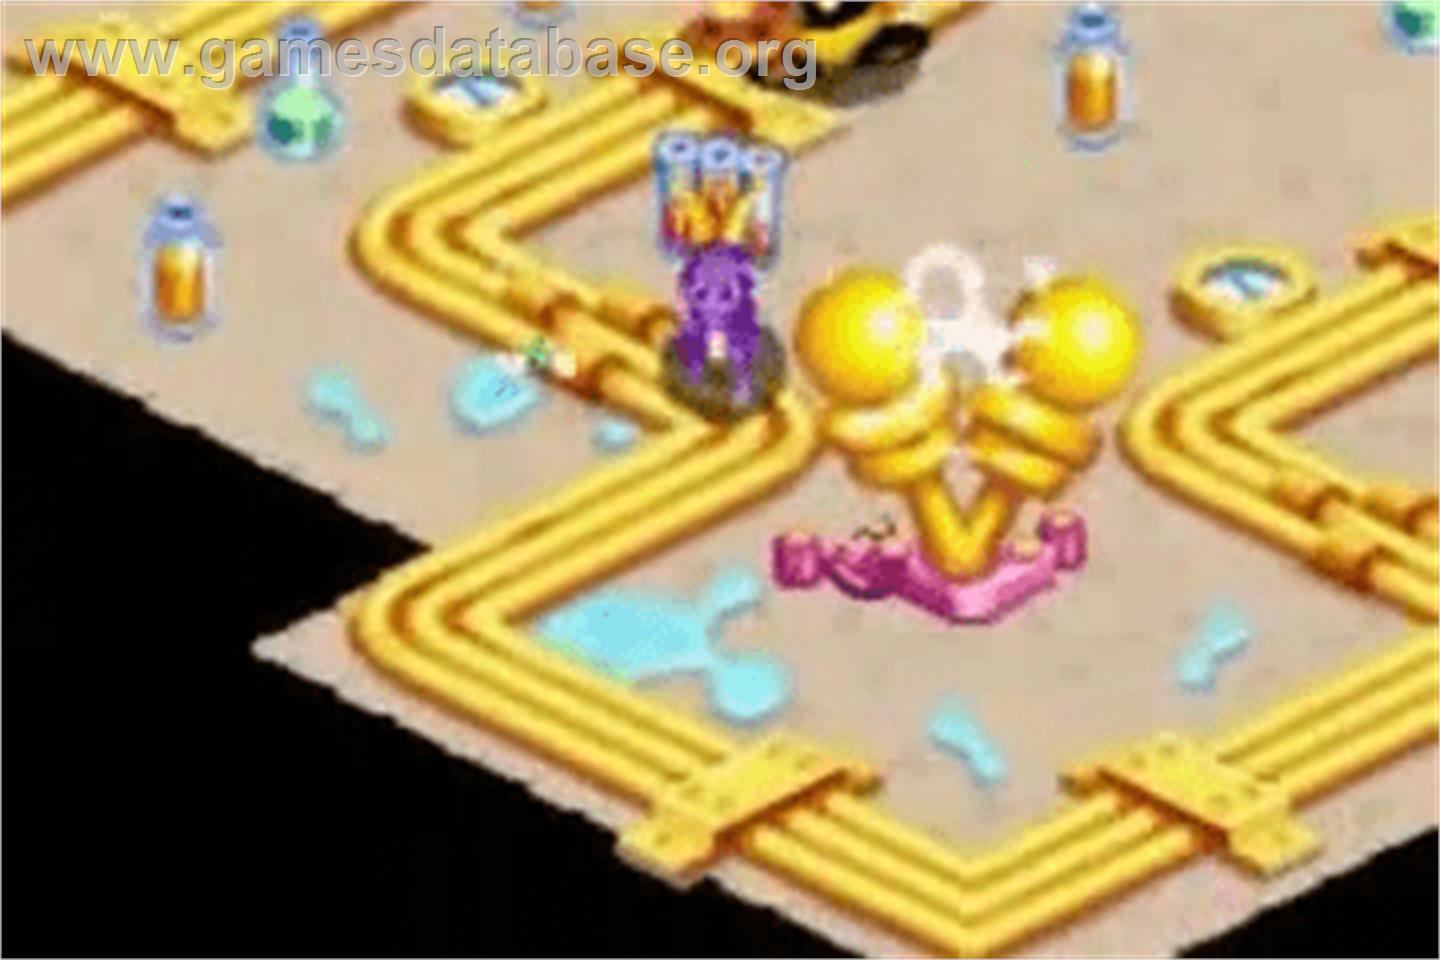 Spyro: Attack of the Rhynocs - Nintendo Game Boy Advance - Artwork - In Game